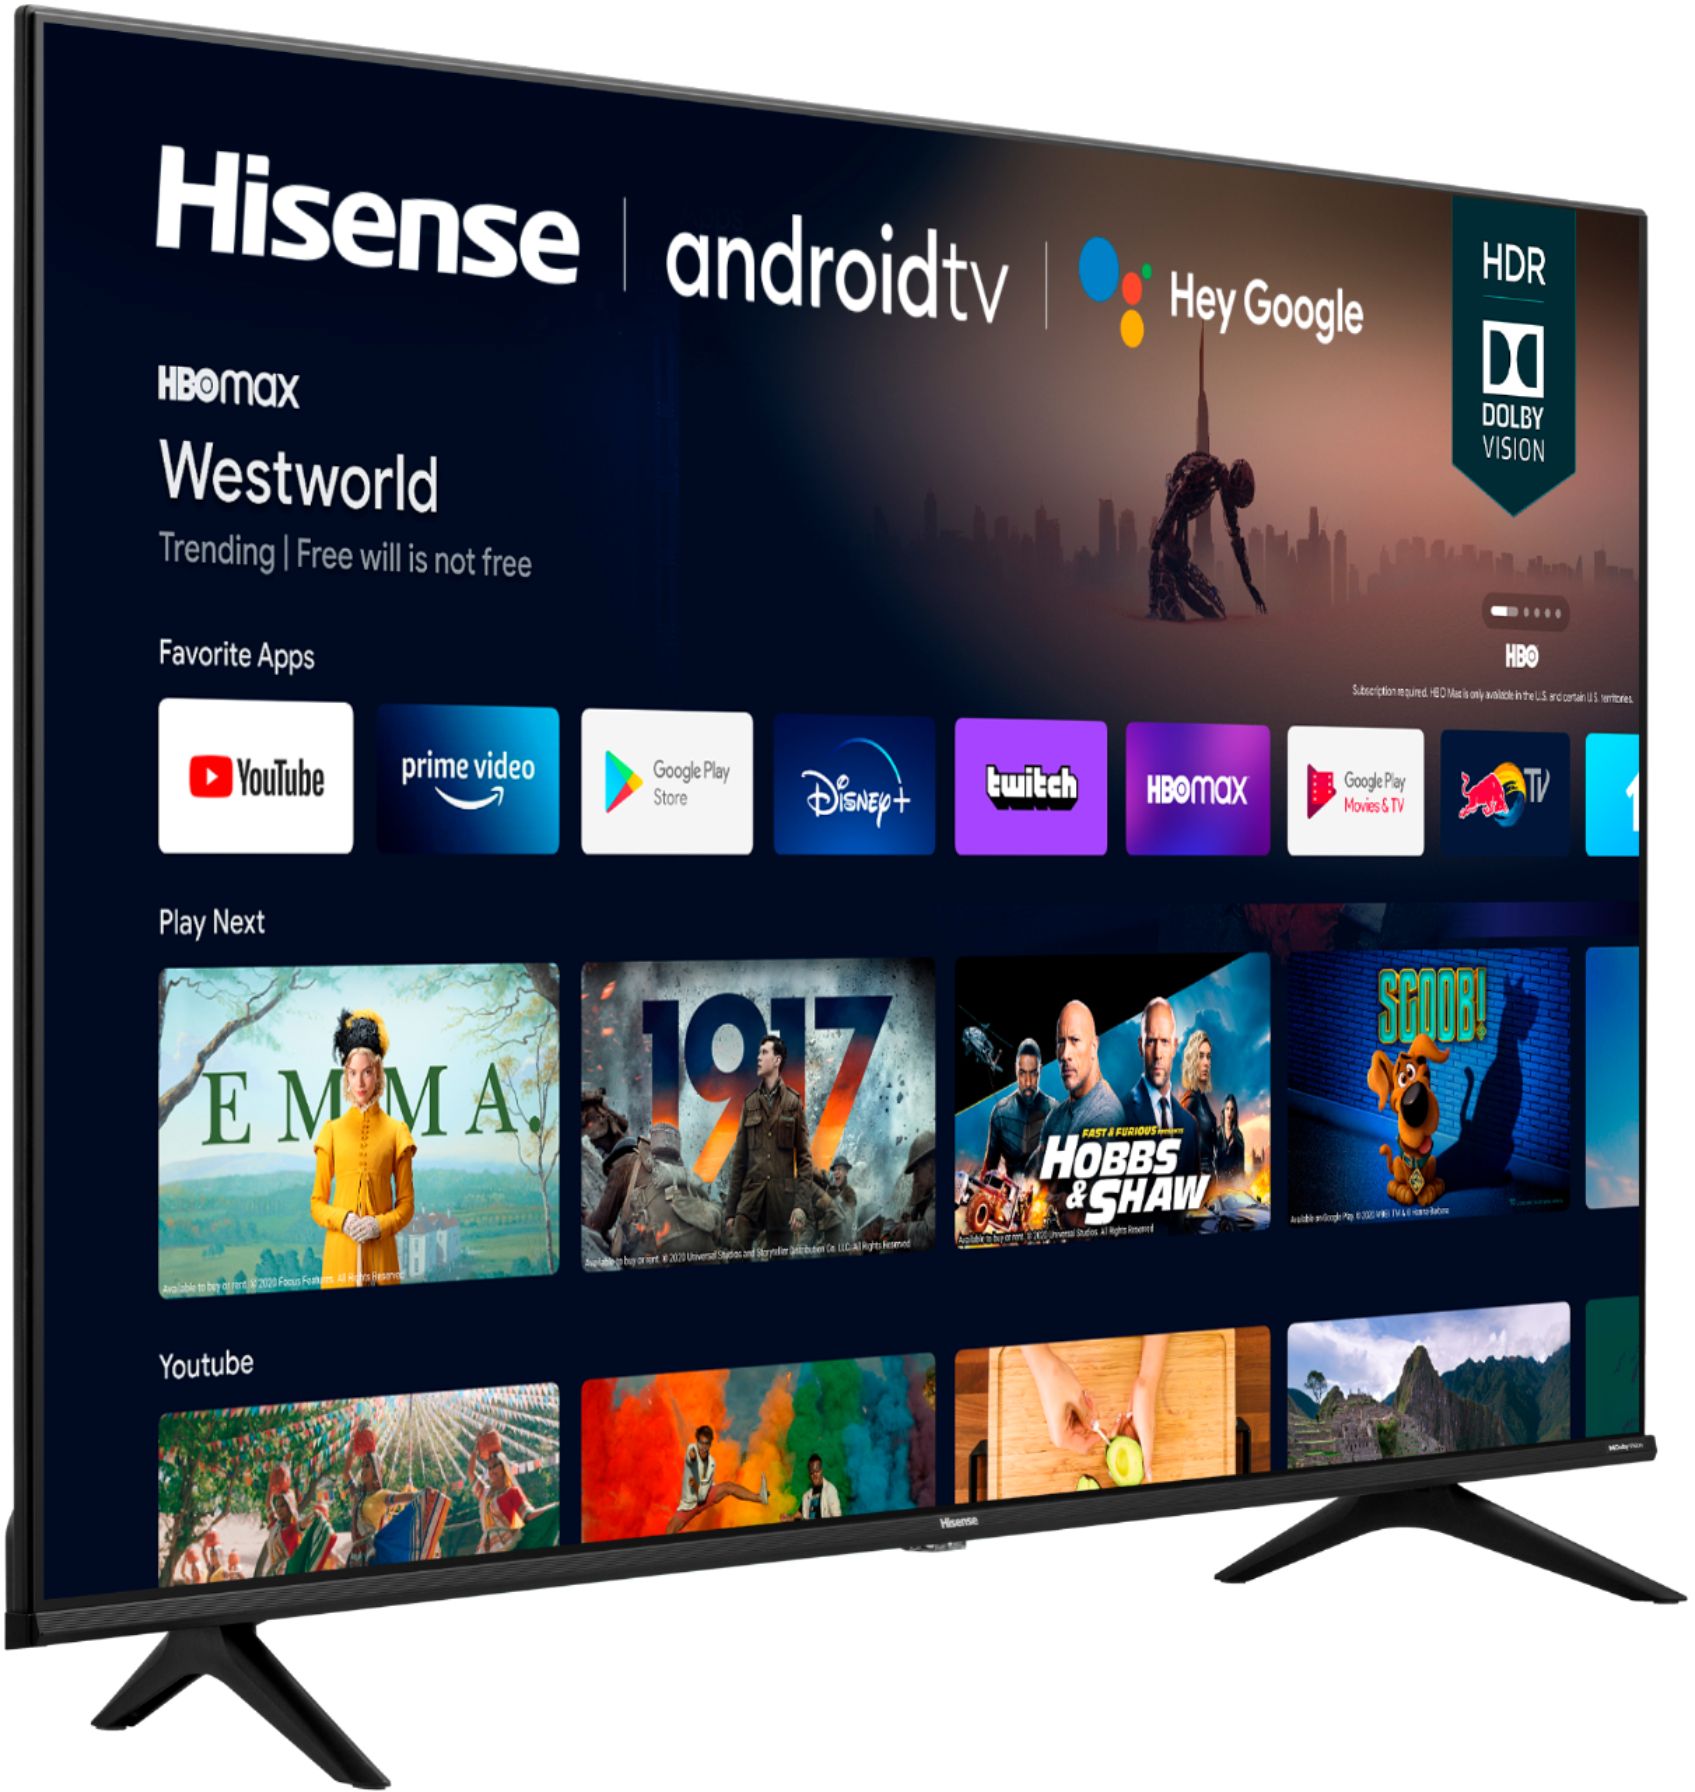 Televisión Smart TV Hisense LED A6GR 65 Pulgadas 4K Ultra HD WideScreen  Negro - Digitalife eShop